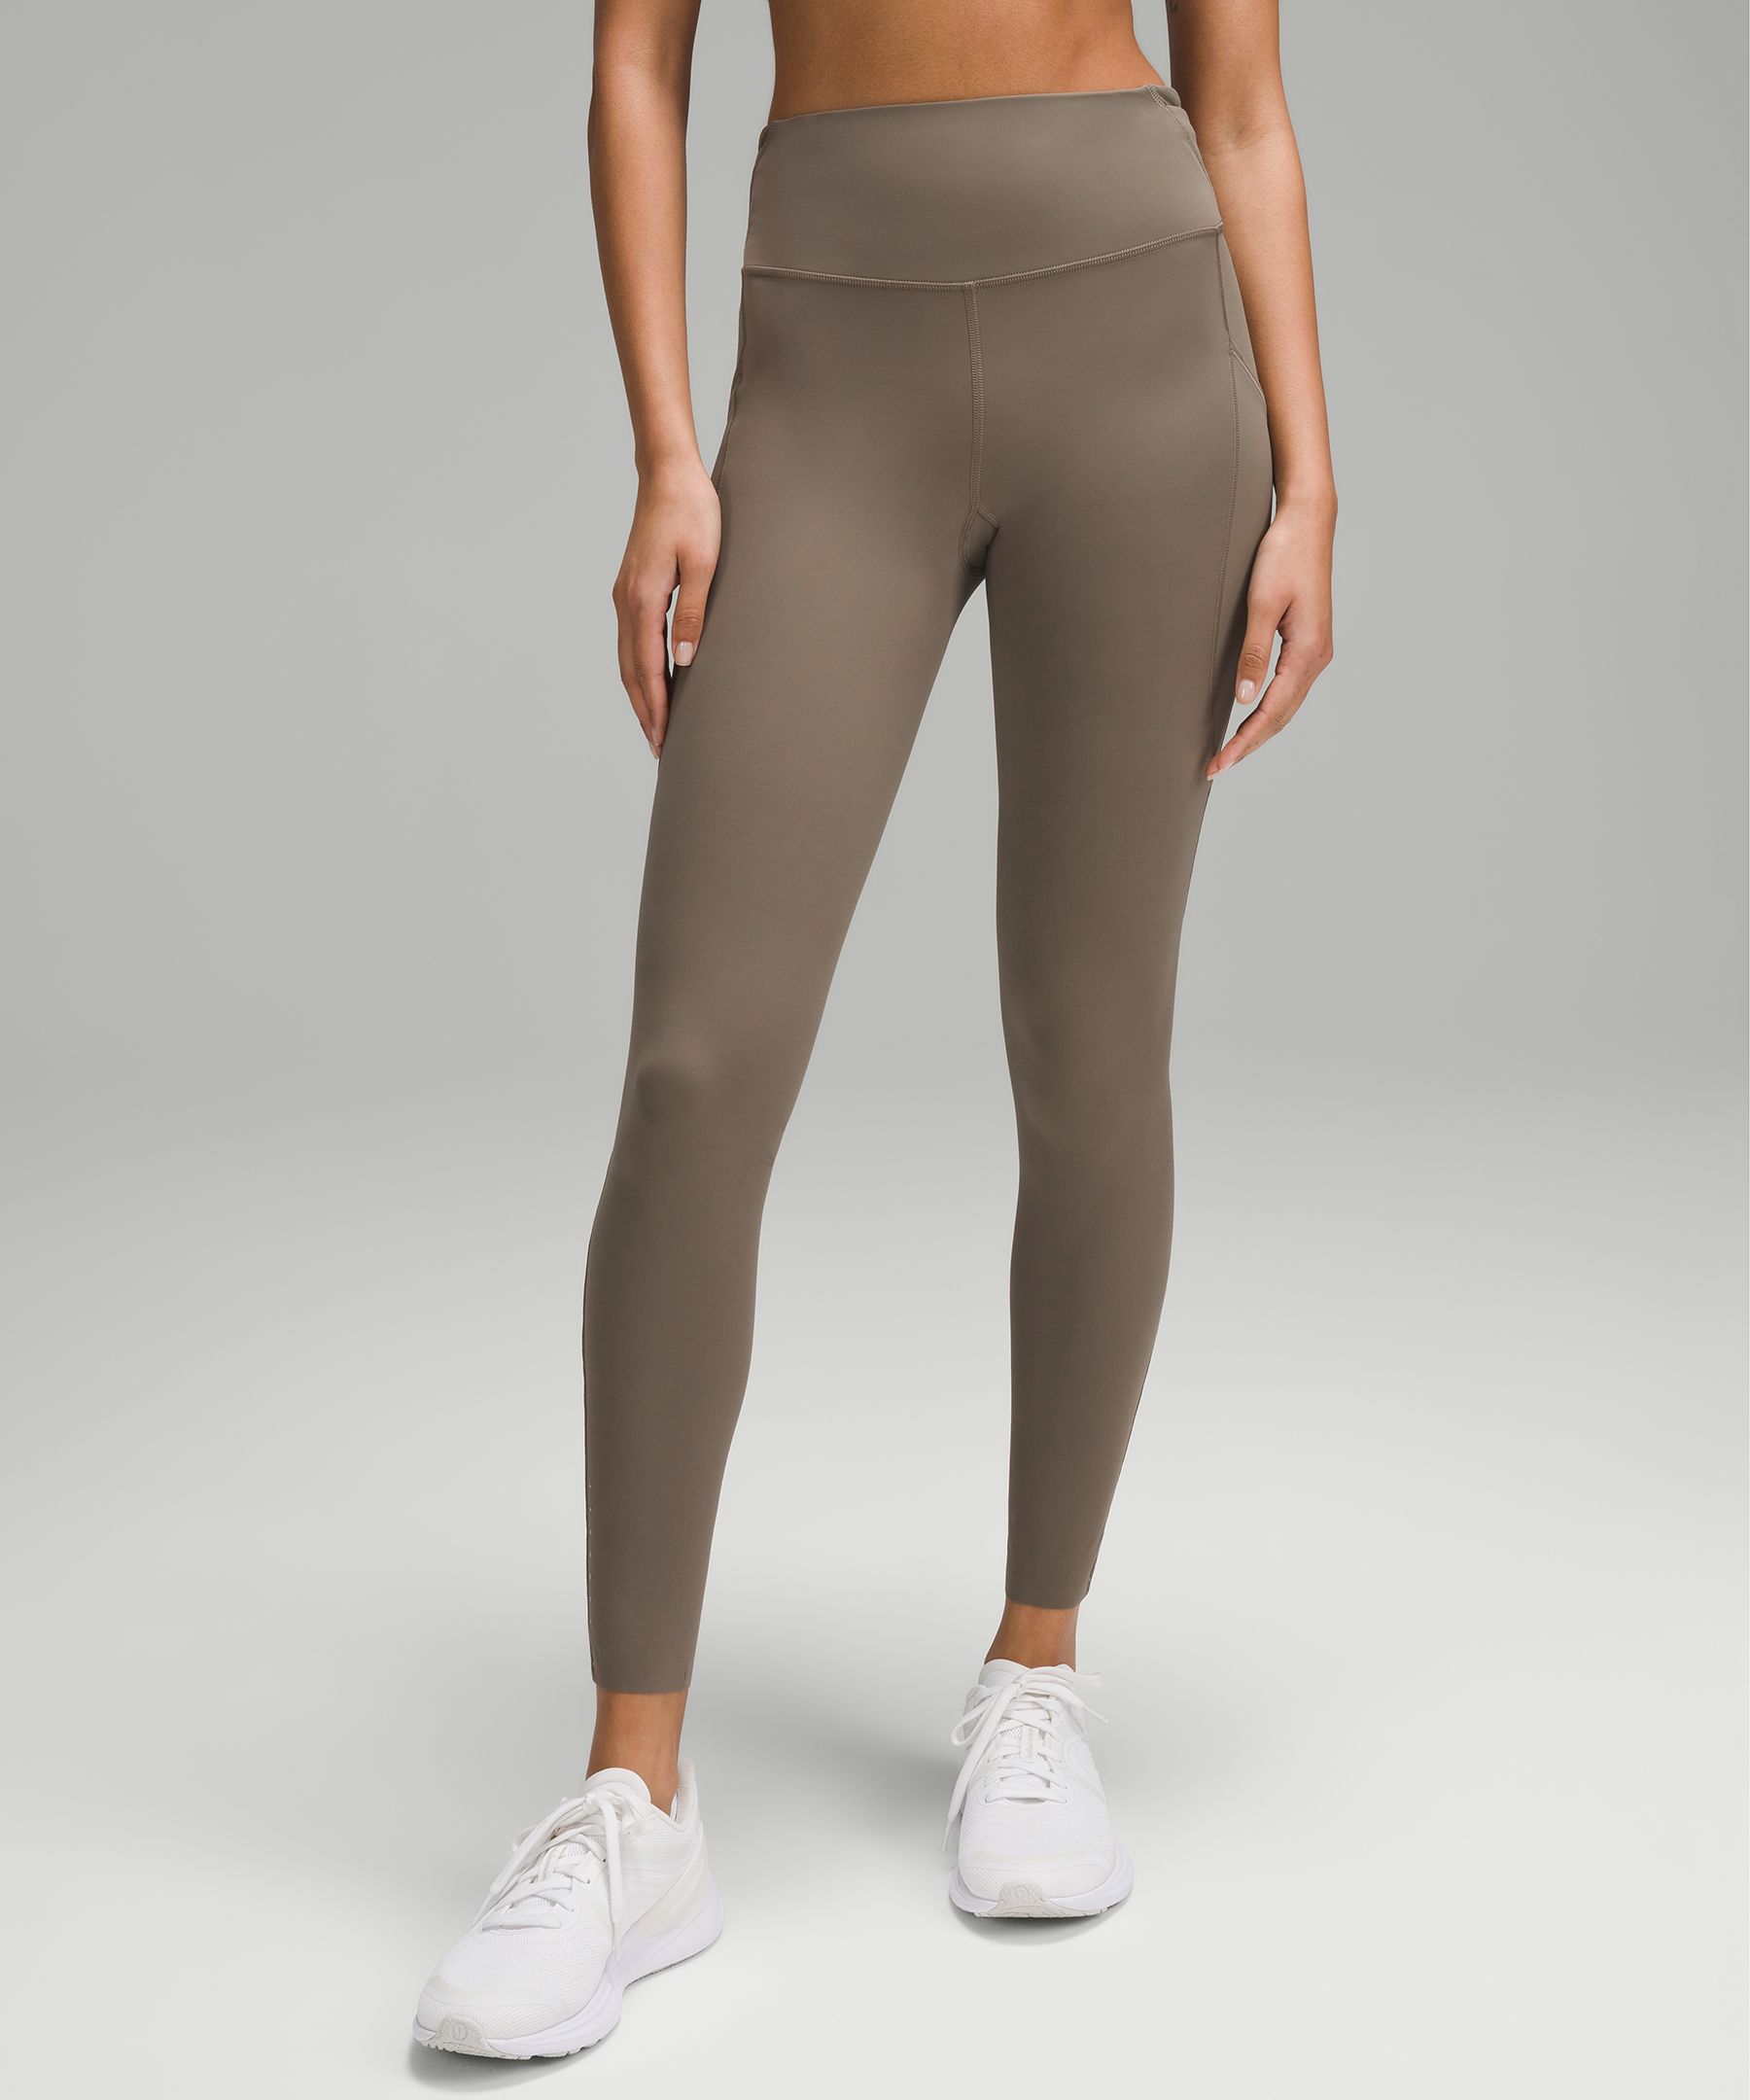 Lululemon new yoga sweatpants two-piece leggings pocket breathable high  waist running tights 8807